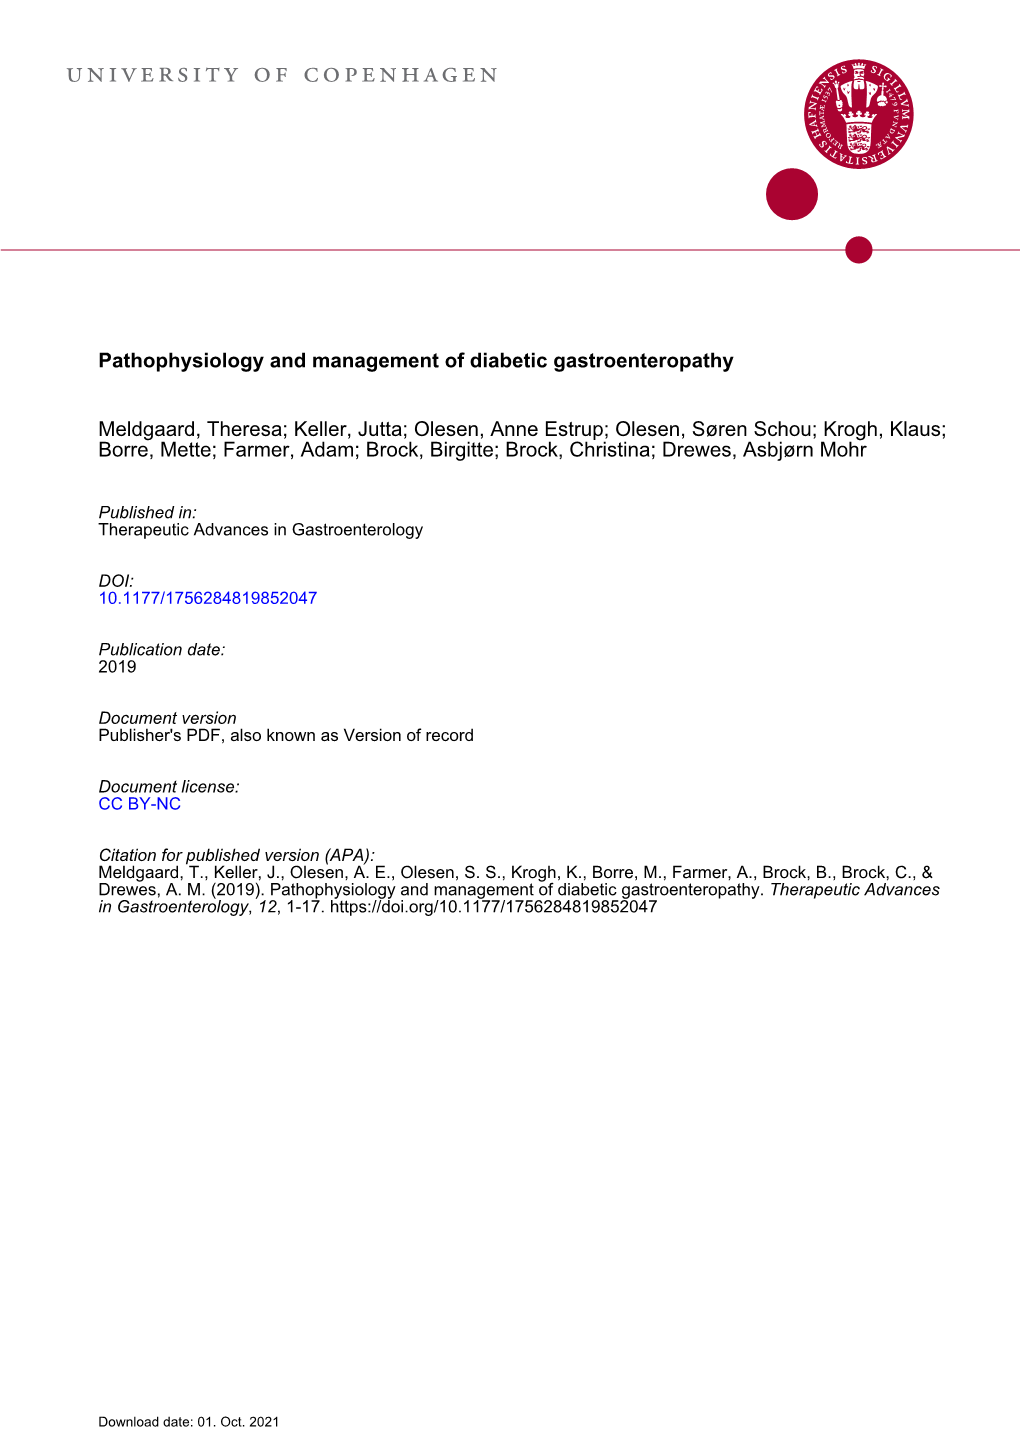 Pathophysiology and Management of Diabetic Gastroenteropathy